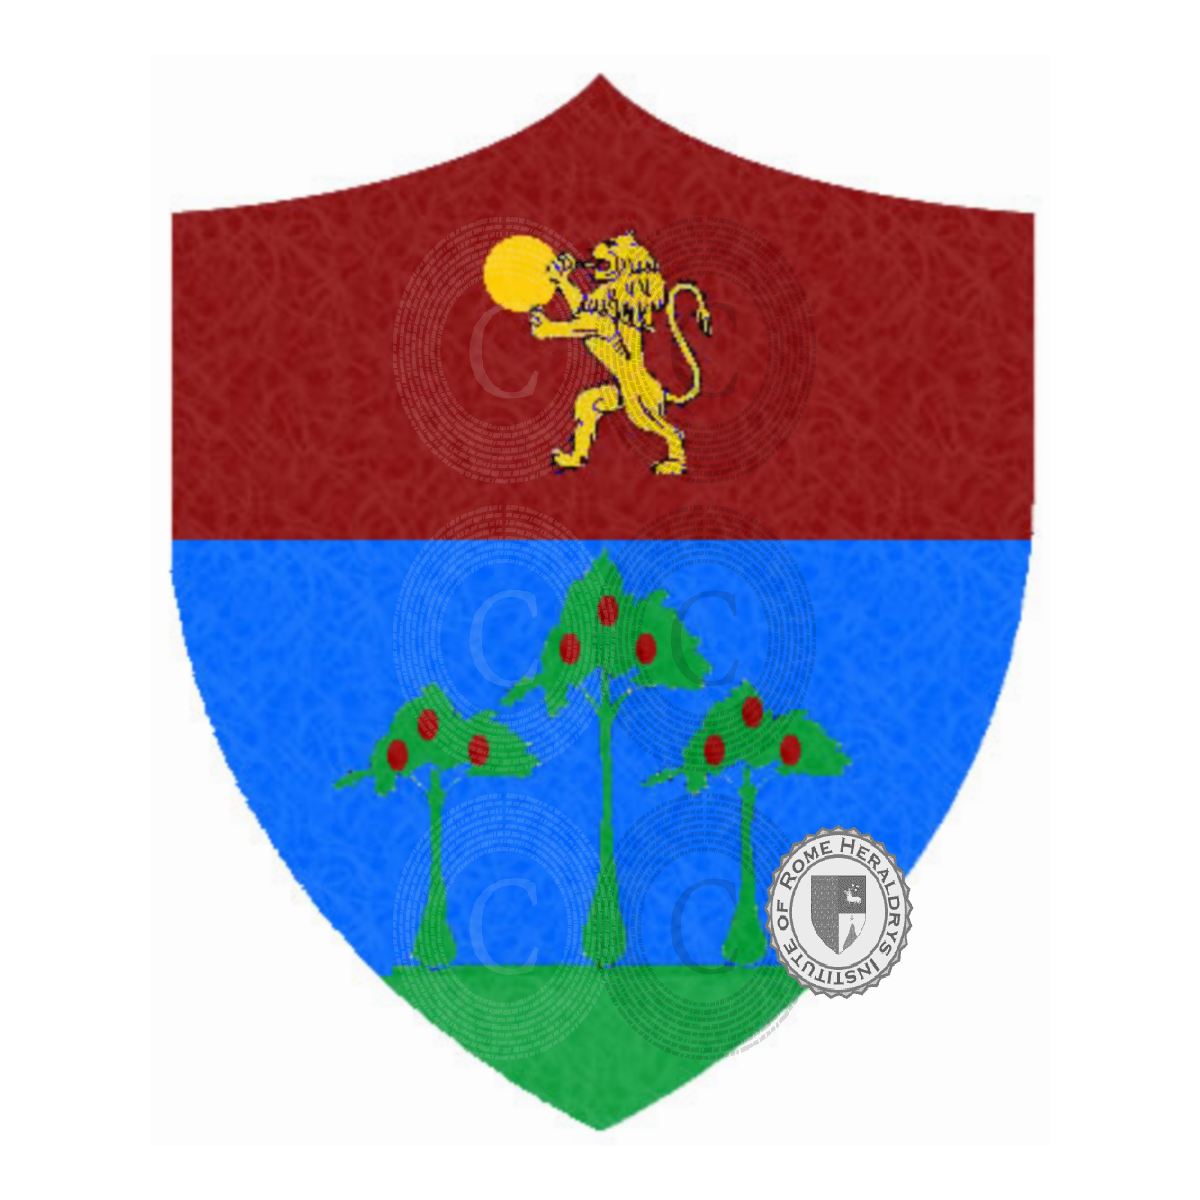 Coat of arms of familytaris